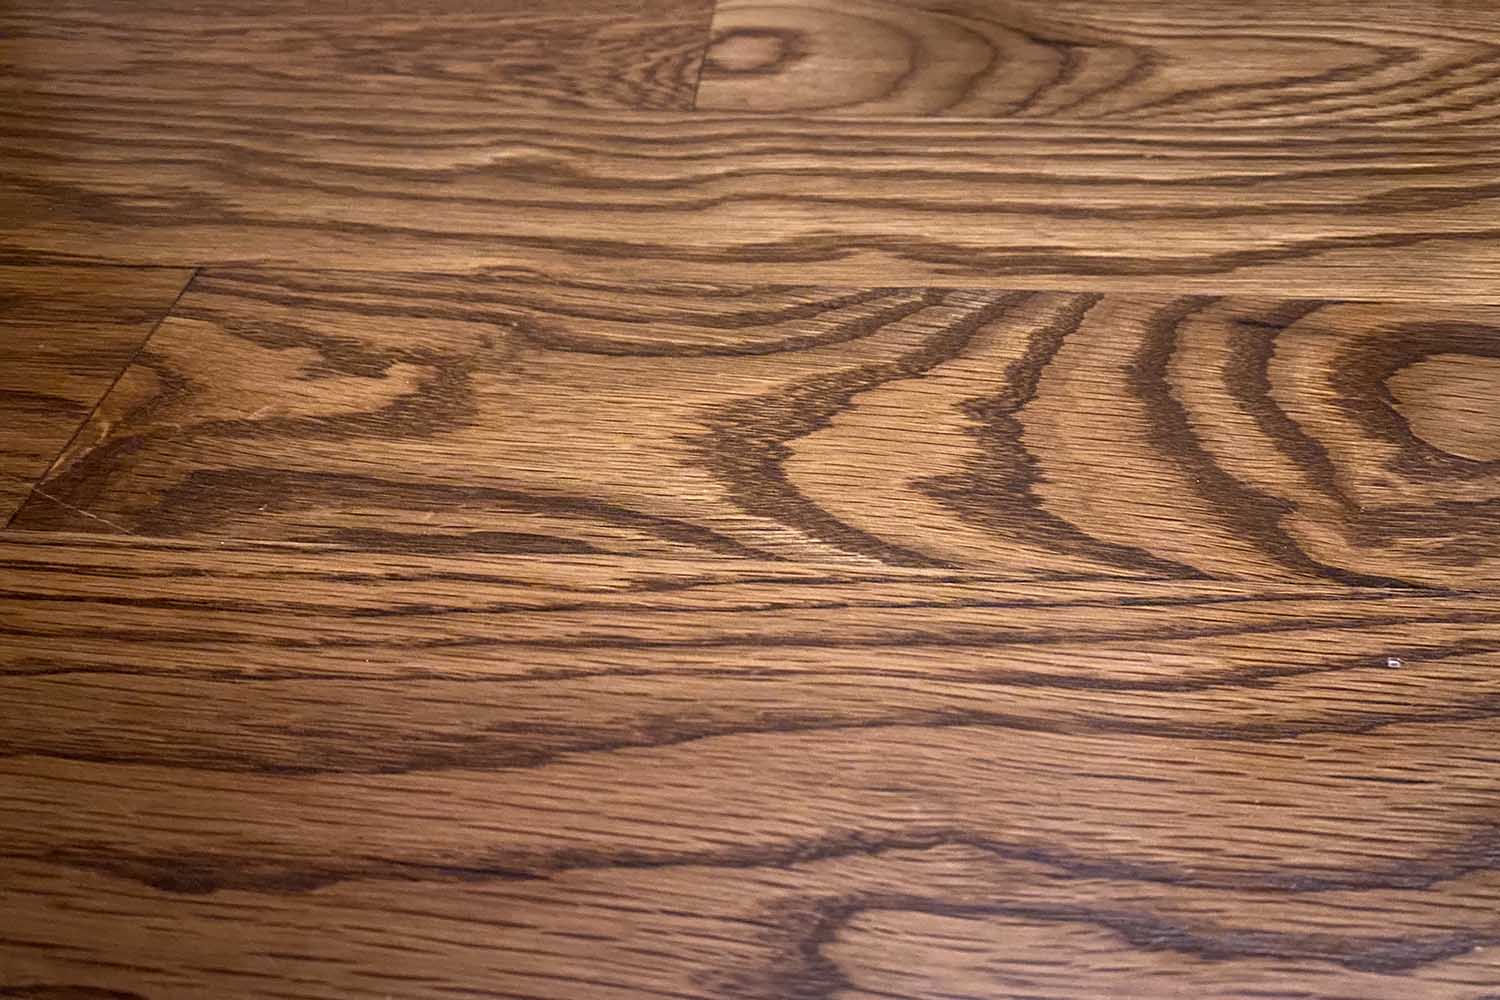 oak hardwood flooring detail